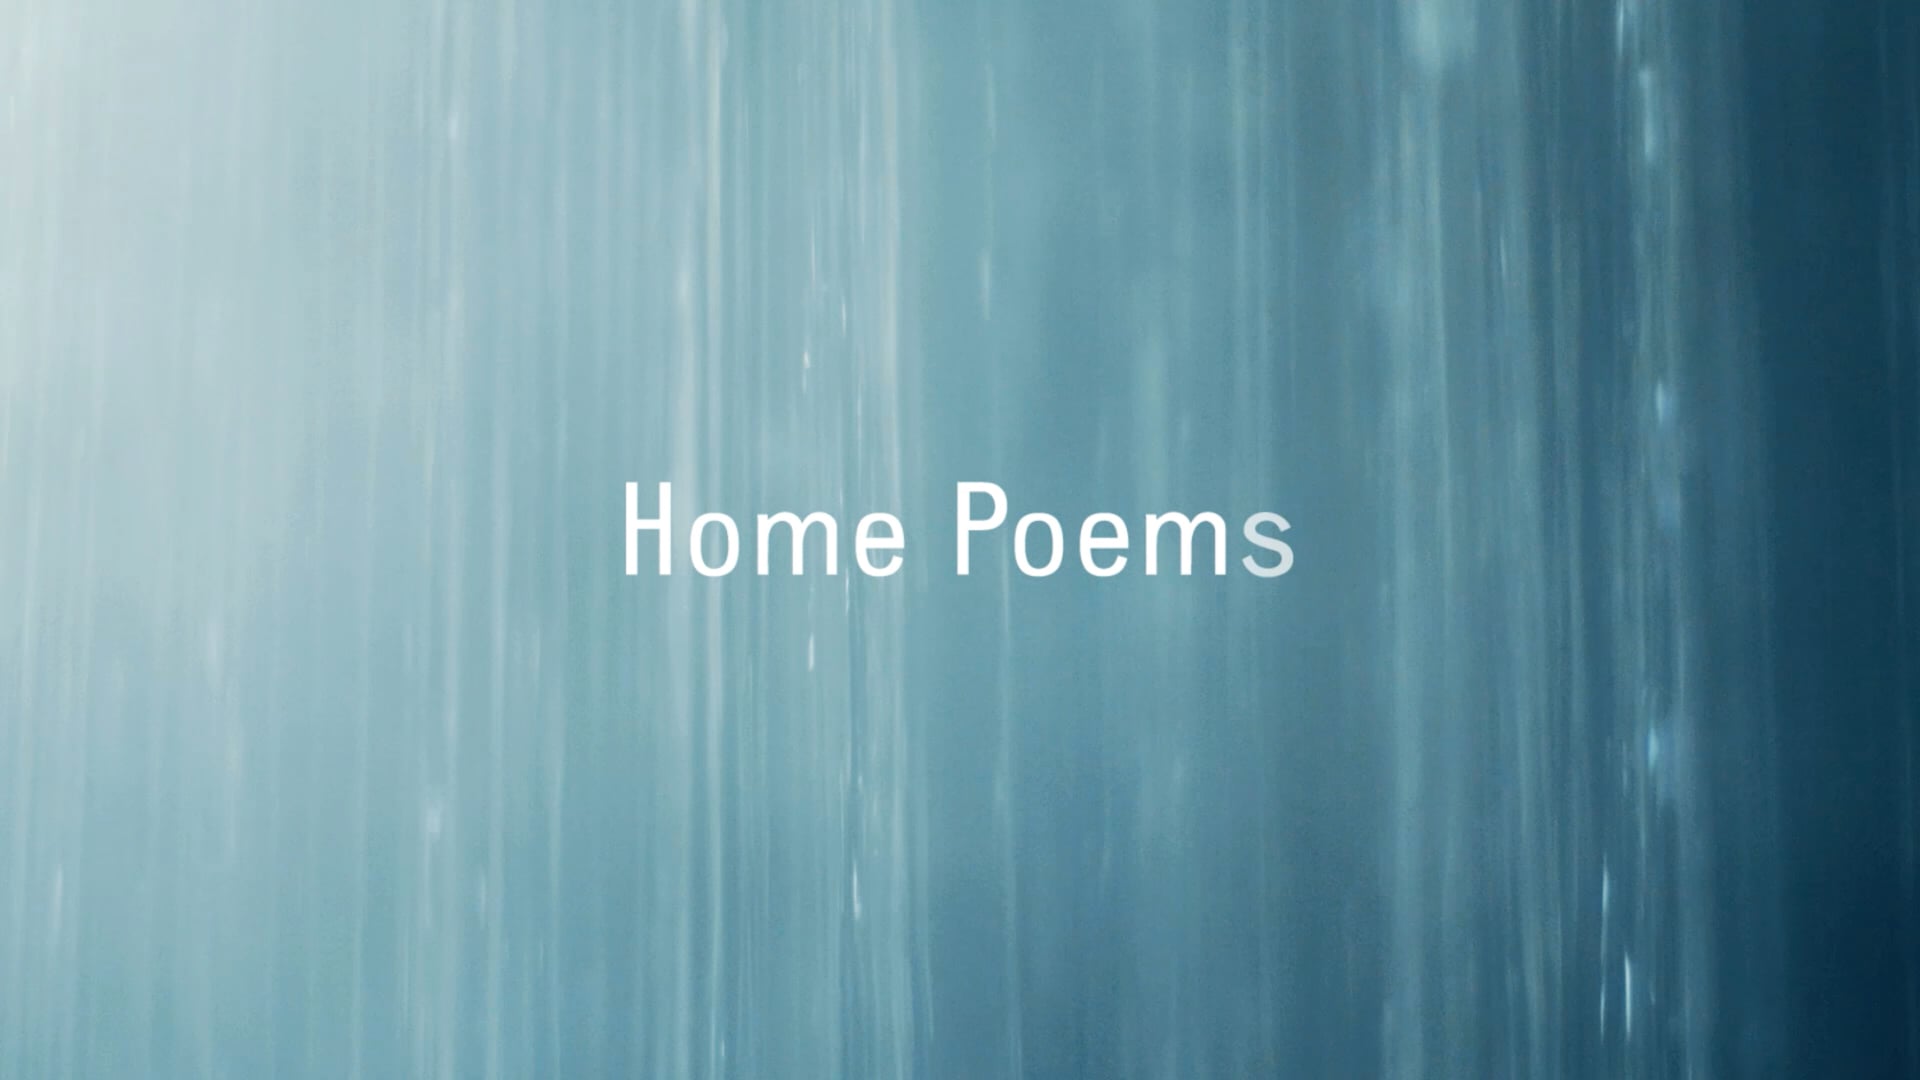 Henry Ponder's Home Poems presents Shower